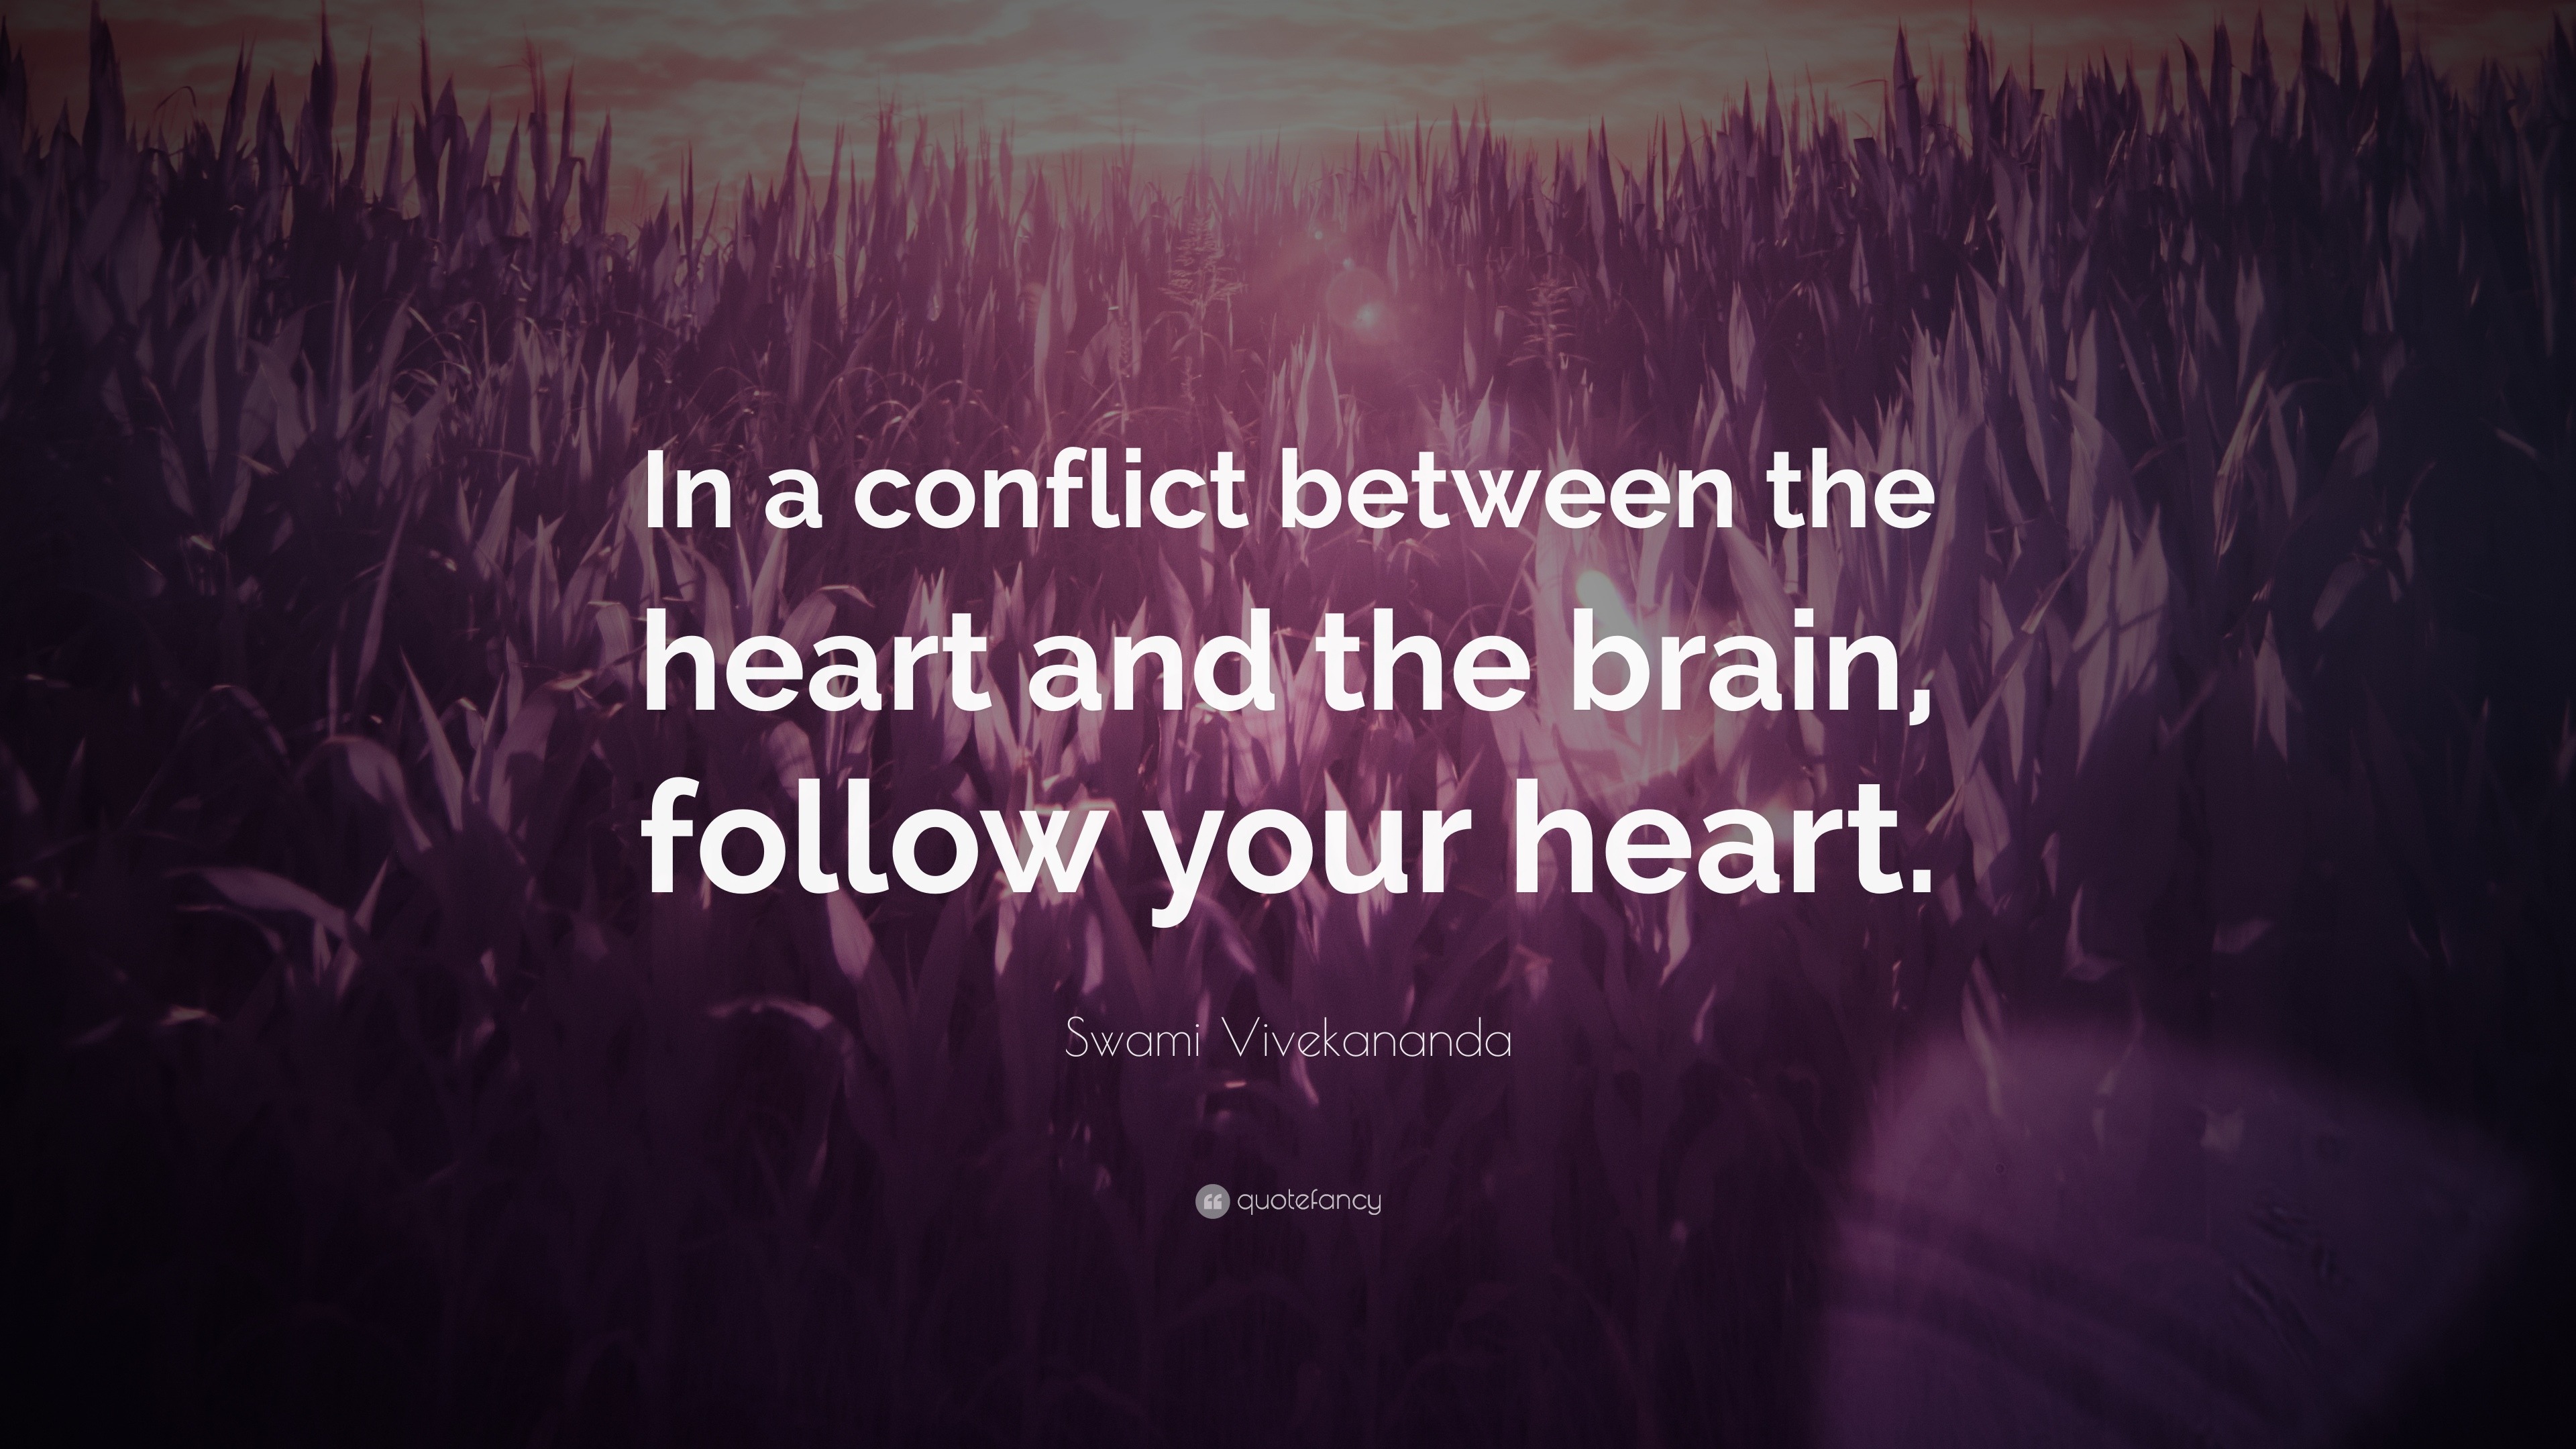 Swami Vivekananda Quote: "In a conflict between the heart ...